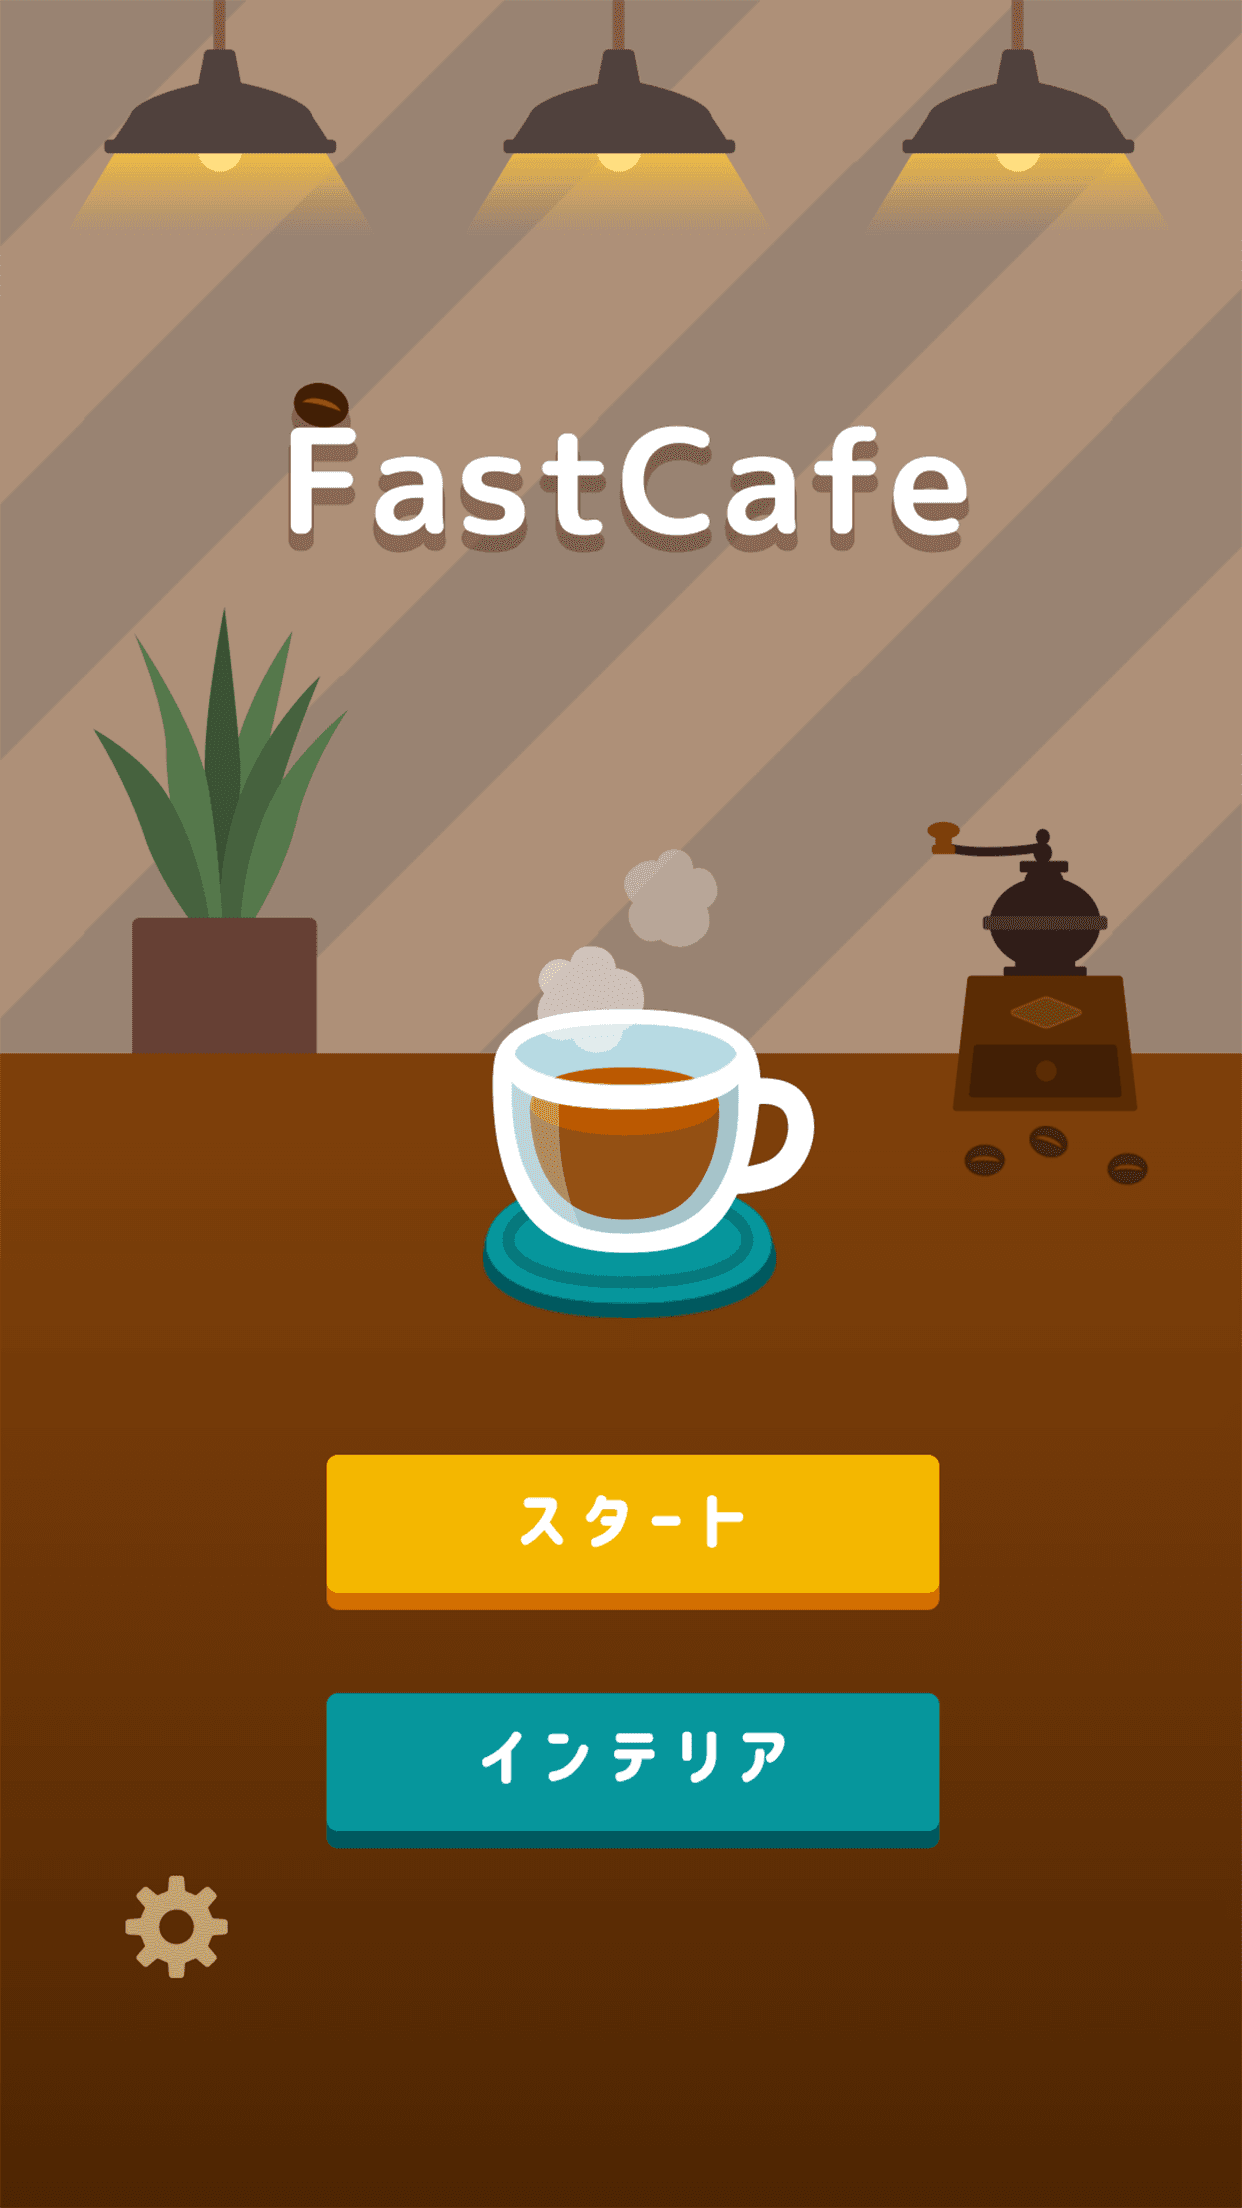 FastCafe - ファストカフェ -のキャプチャ